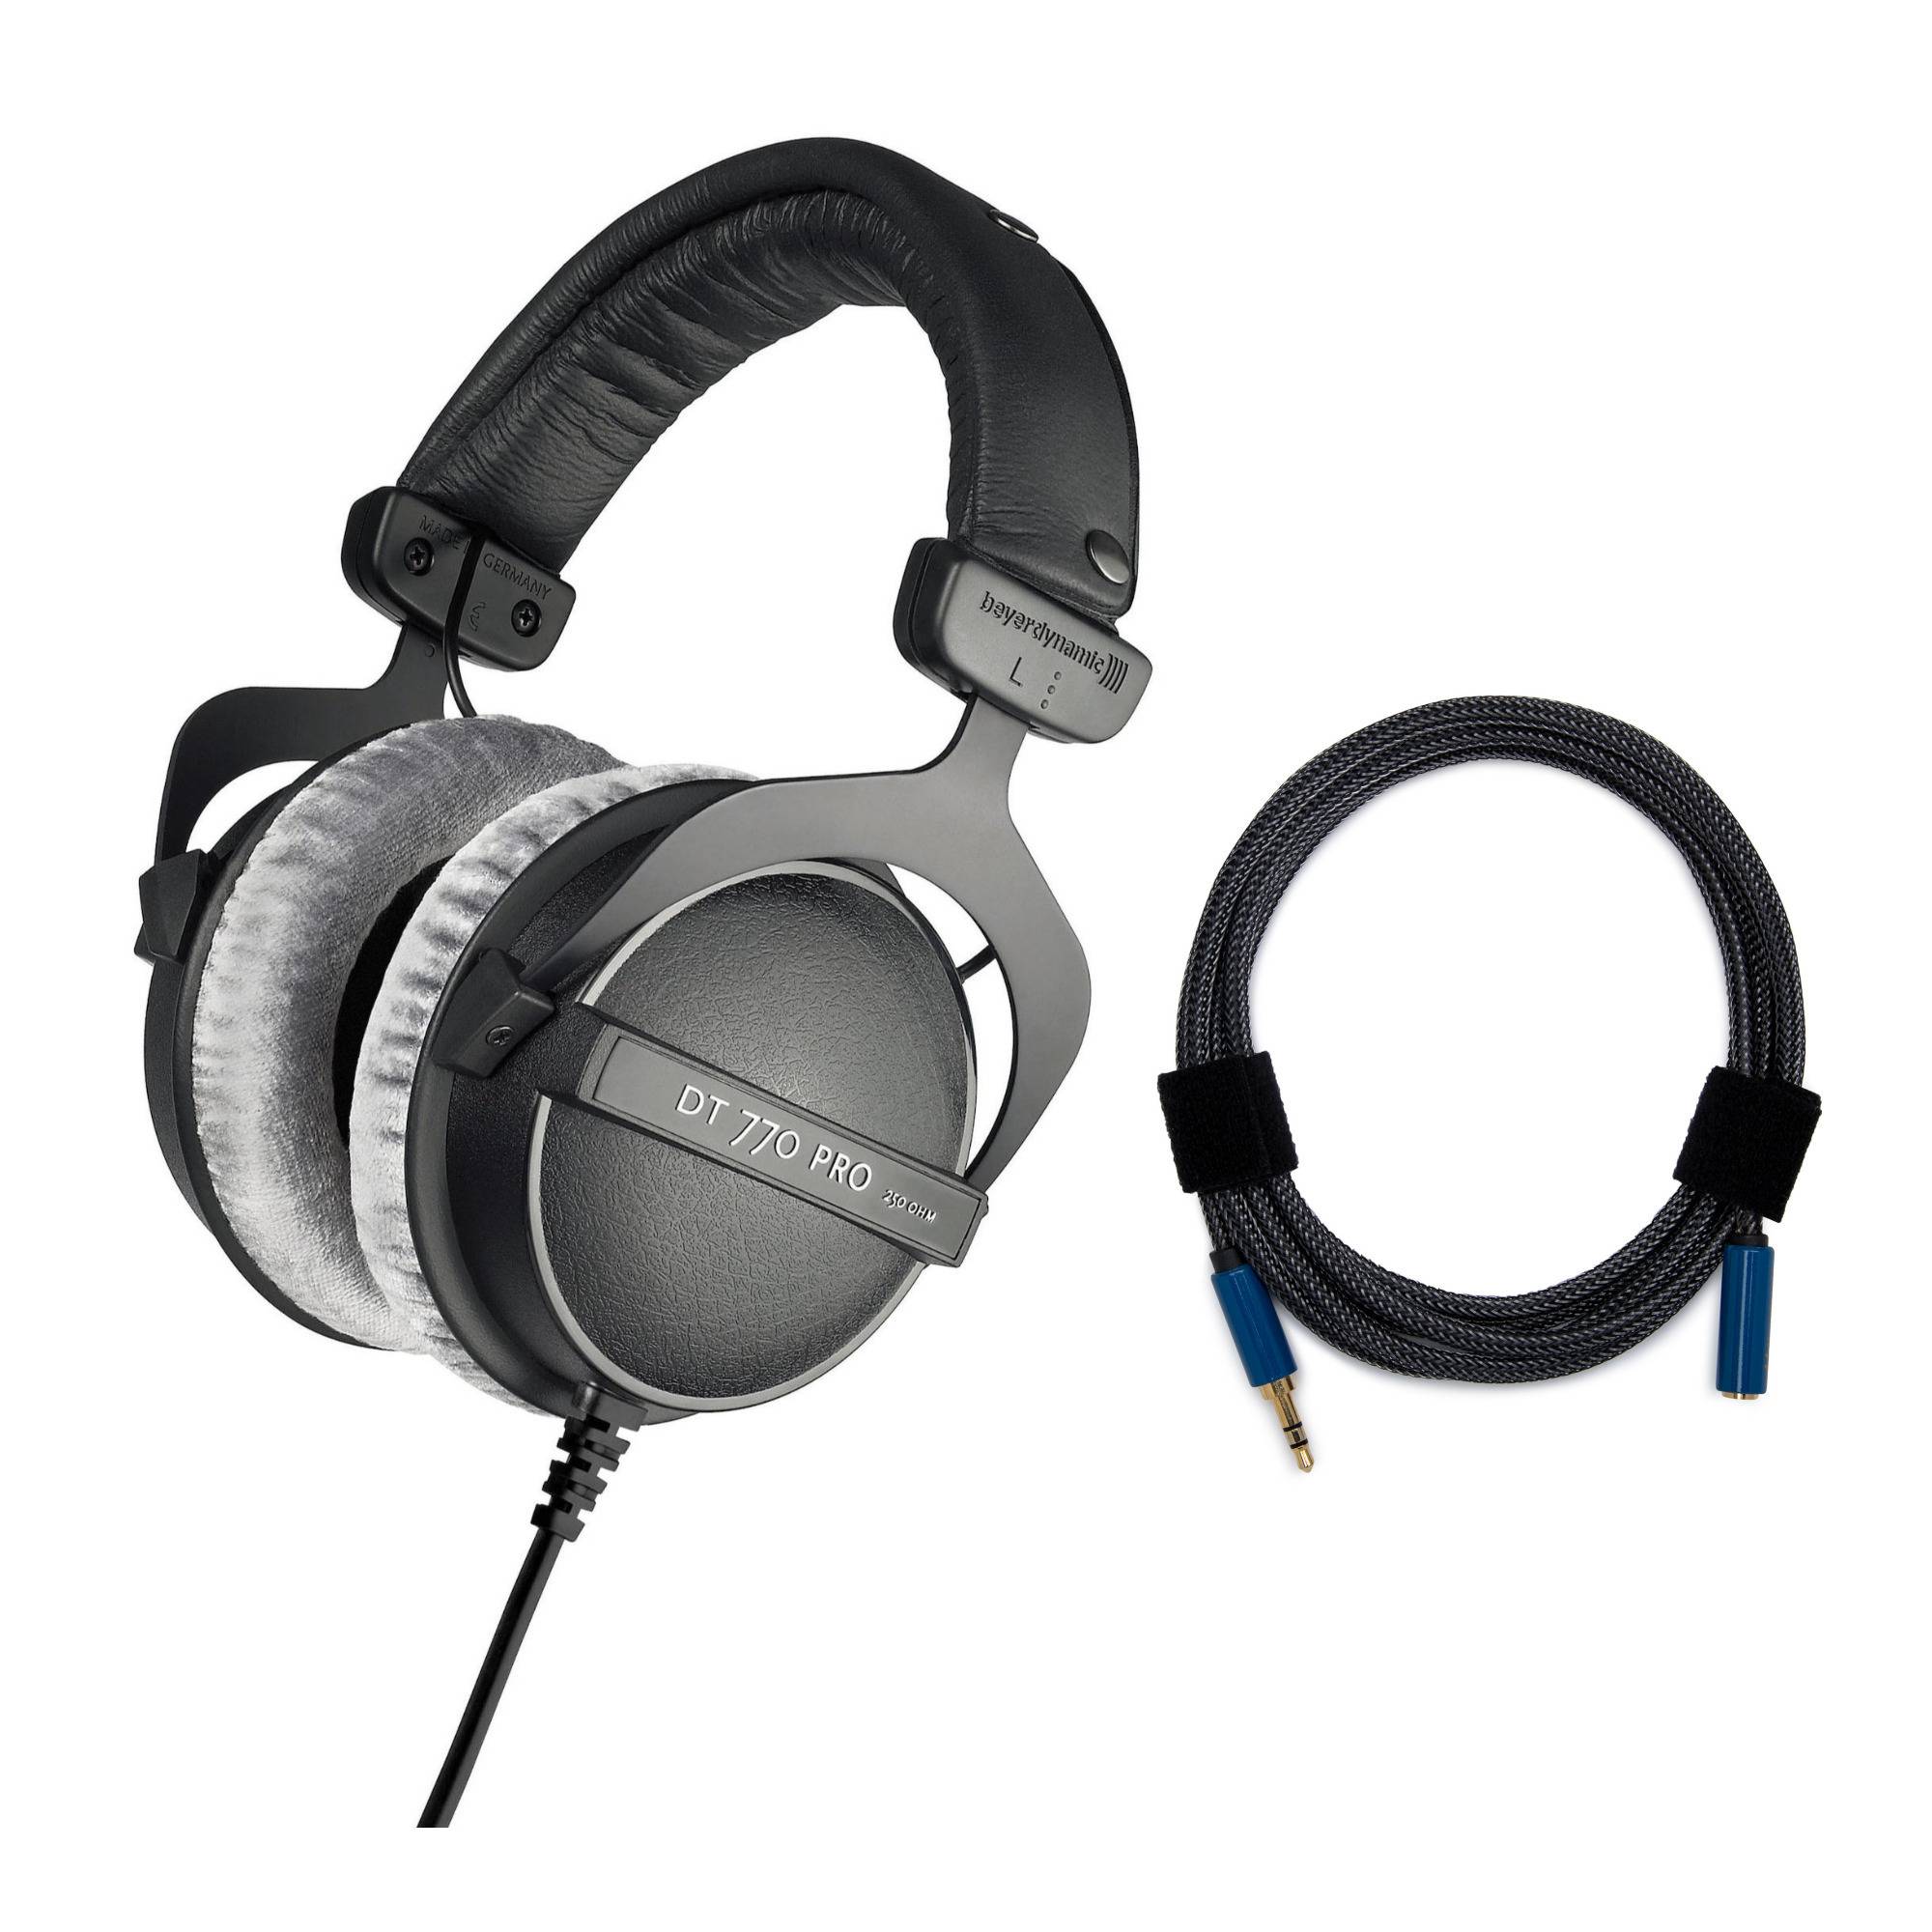 Beyerdynamic DT 770 PRO 80 Ohm Over-Ear Studio Headphones (Black) with Audio Extension Cable